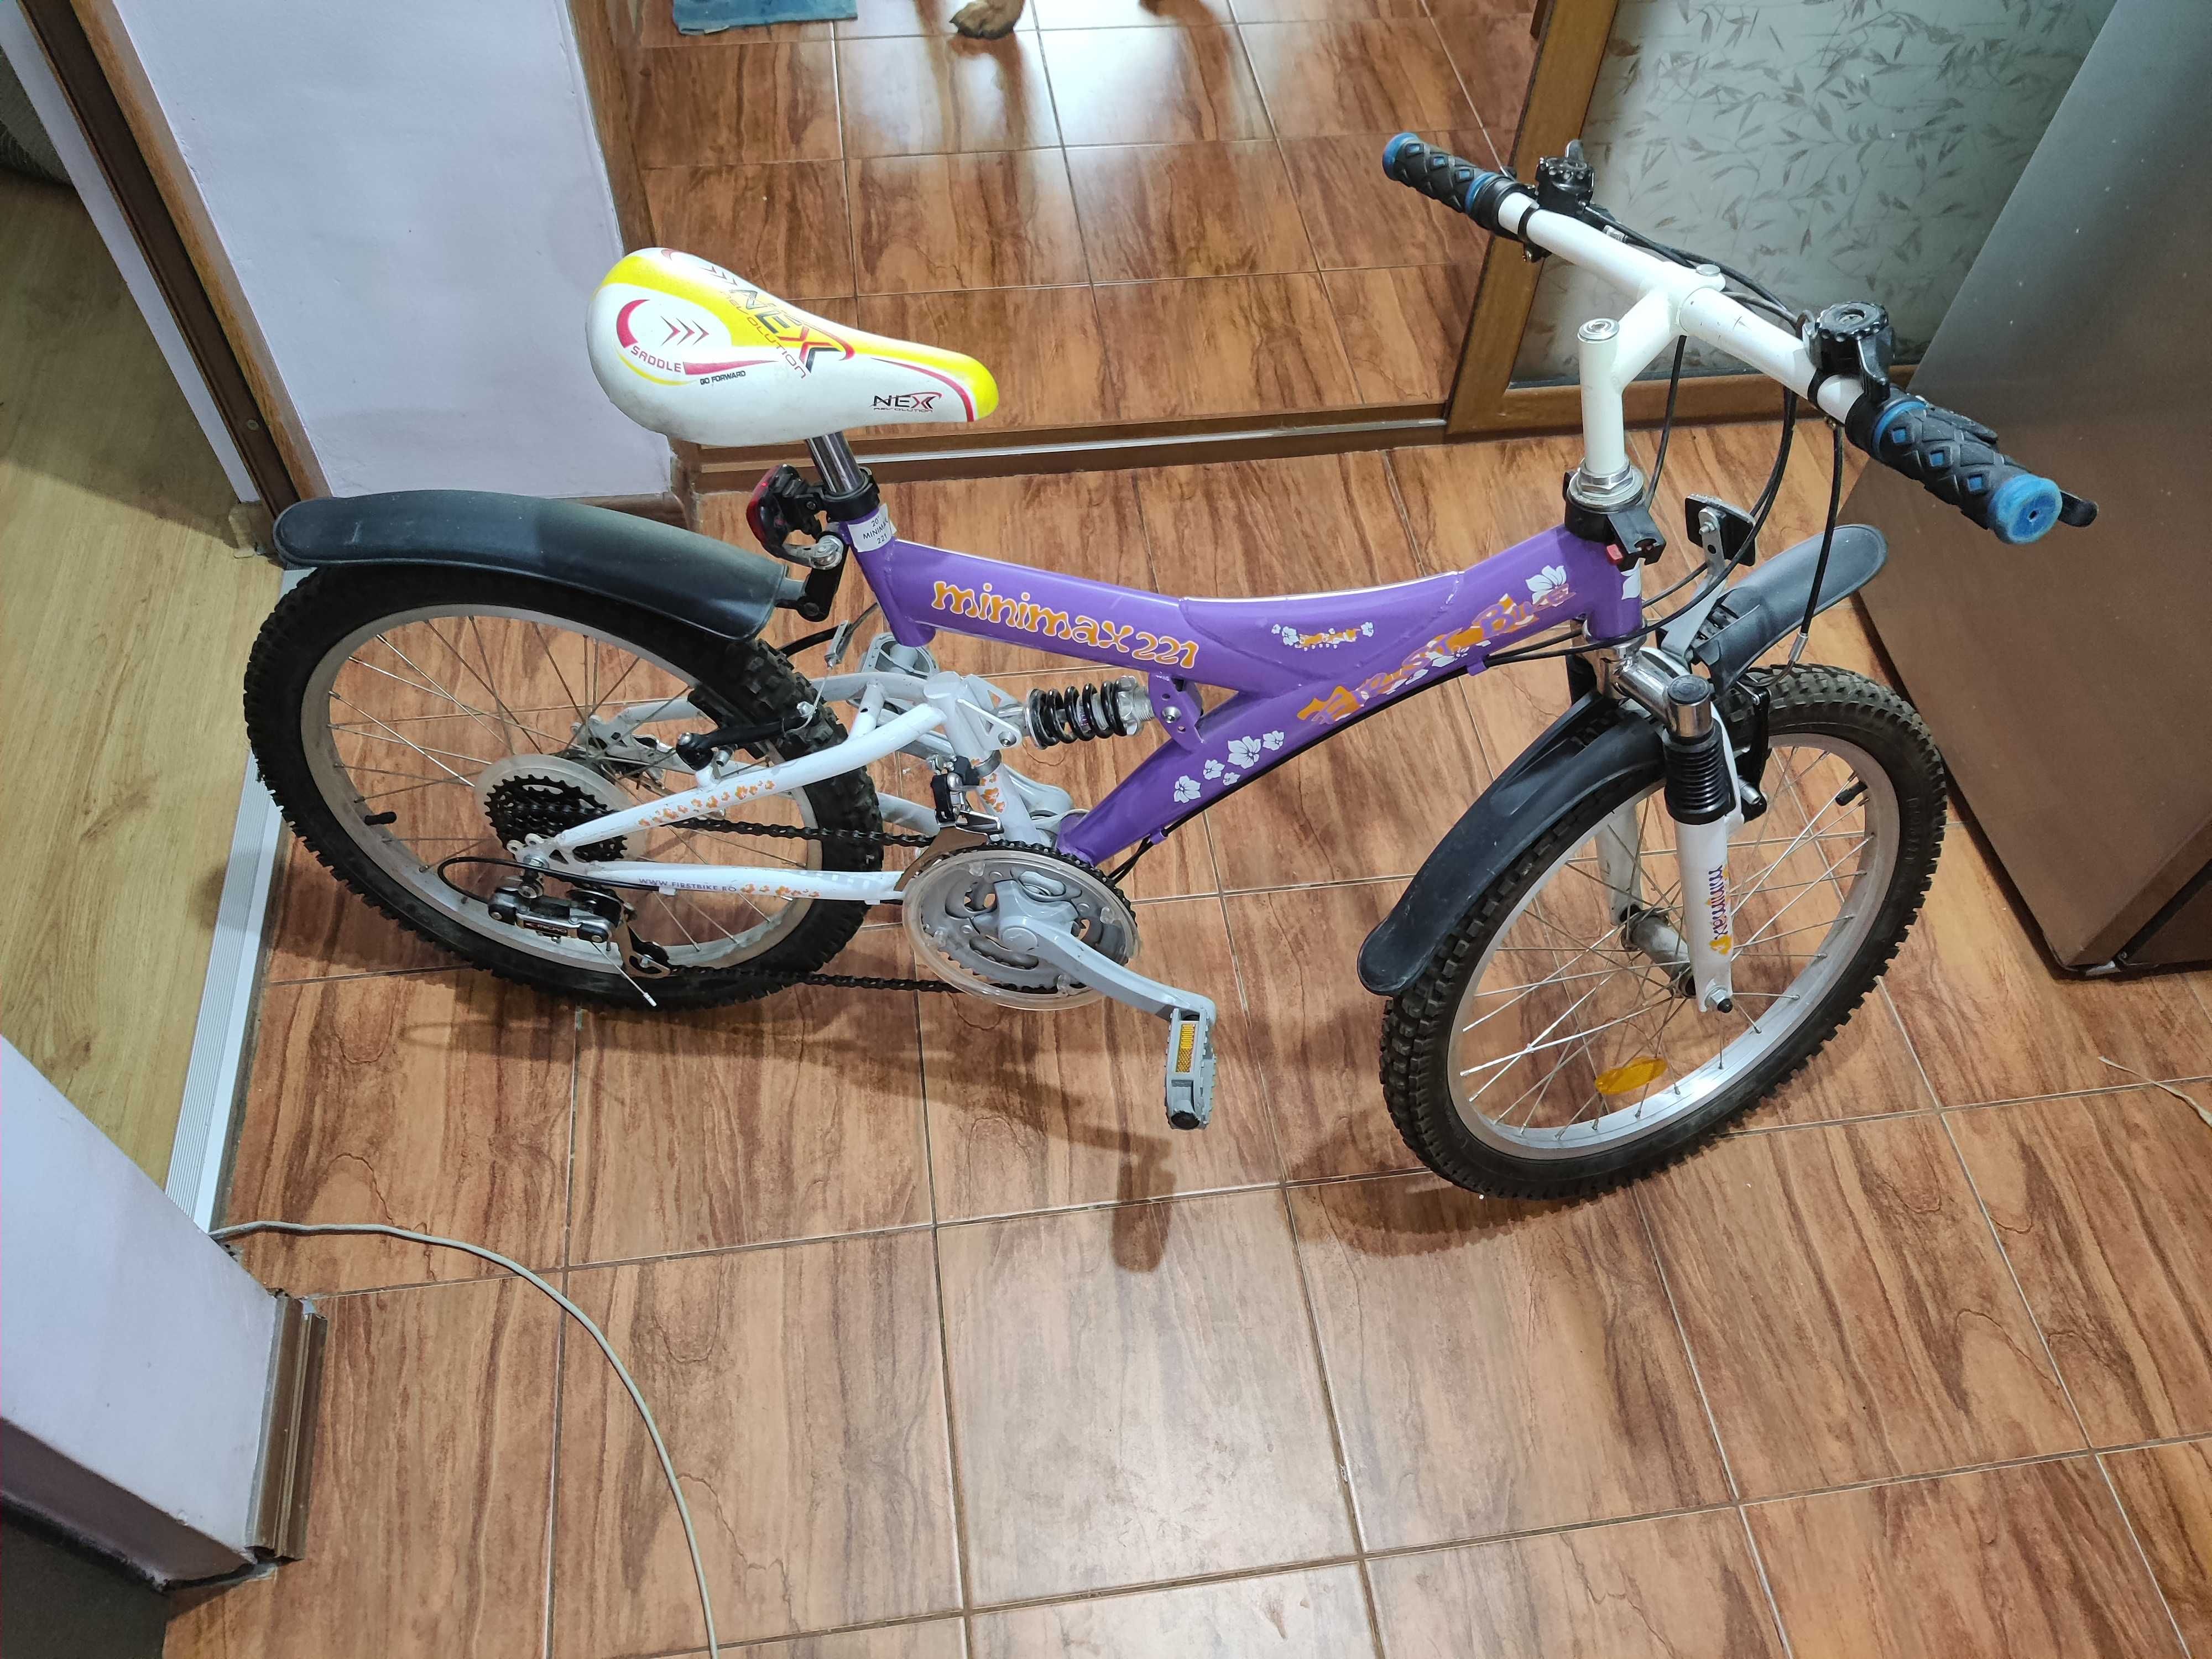 Bicicleta Minimax 221